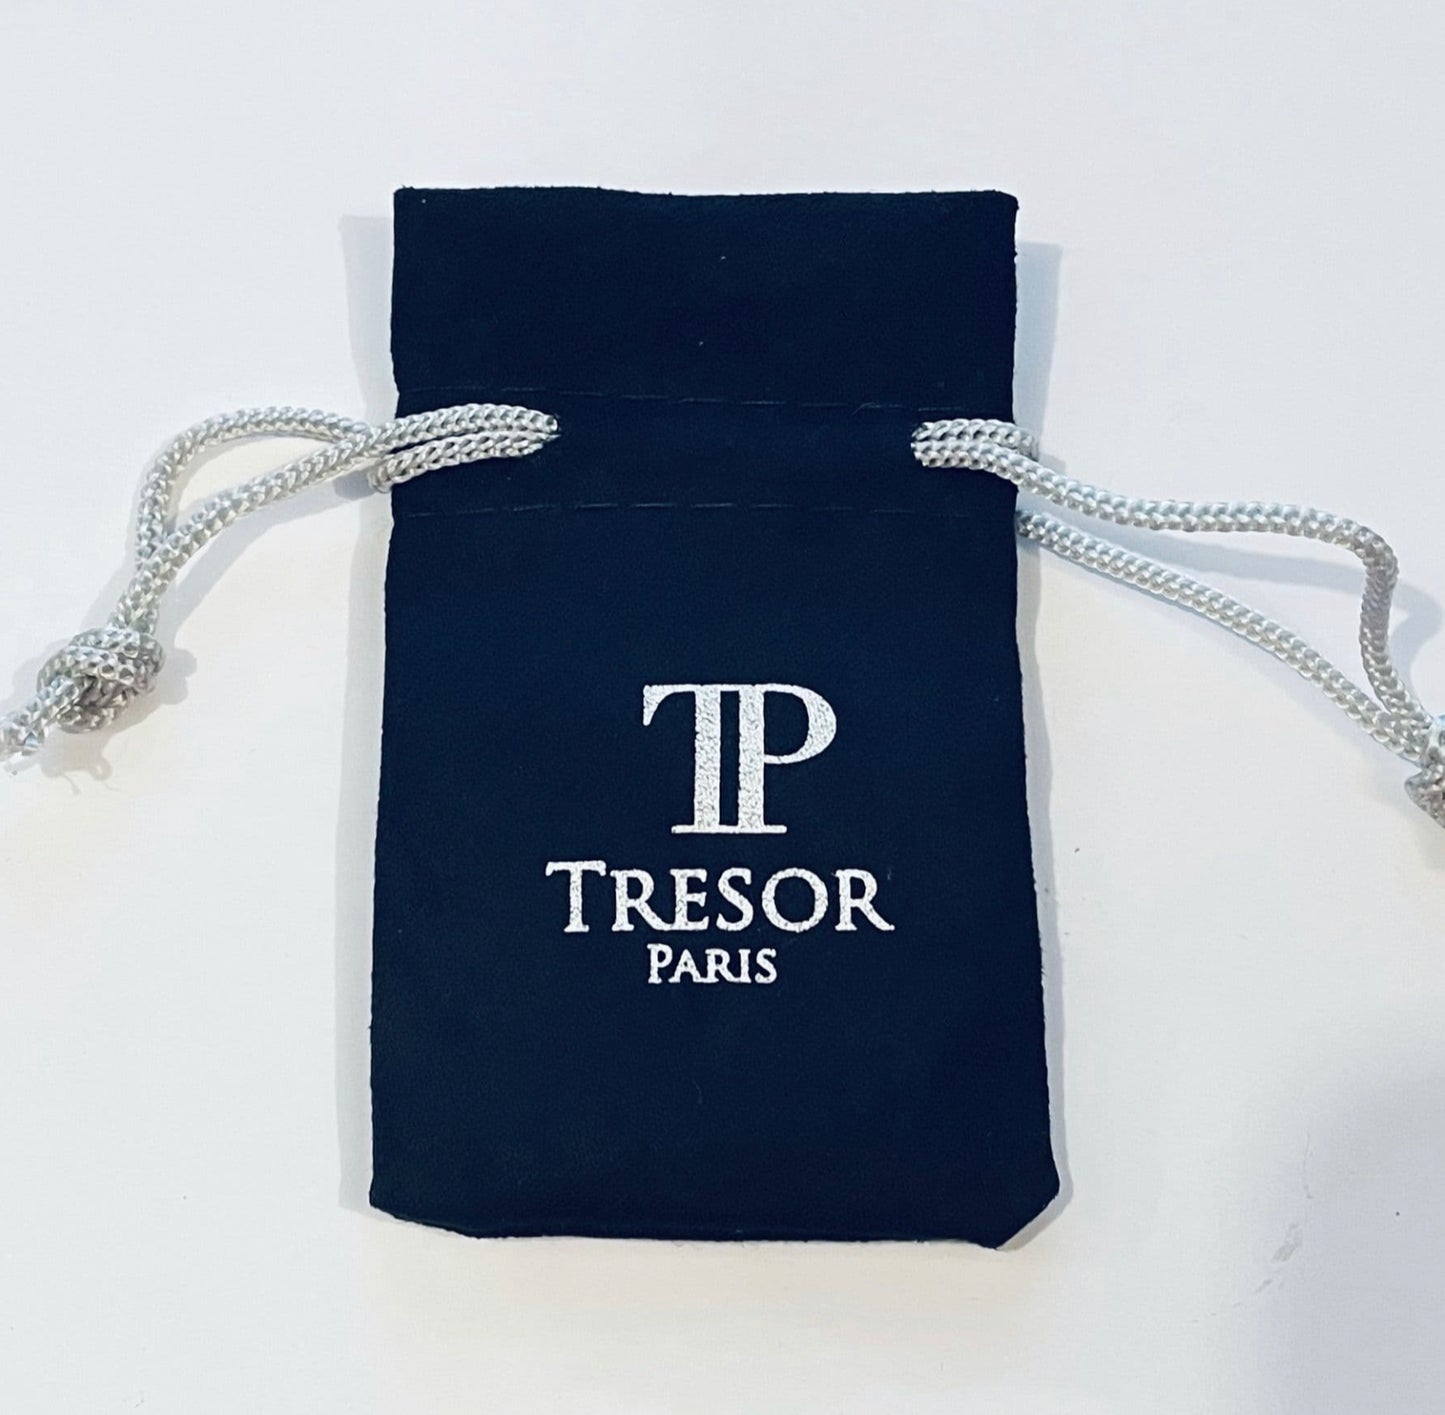 Tresor Paris 10mm Blue Agate Round Stretchy Bracelet